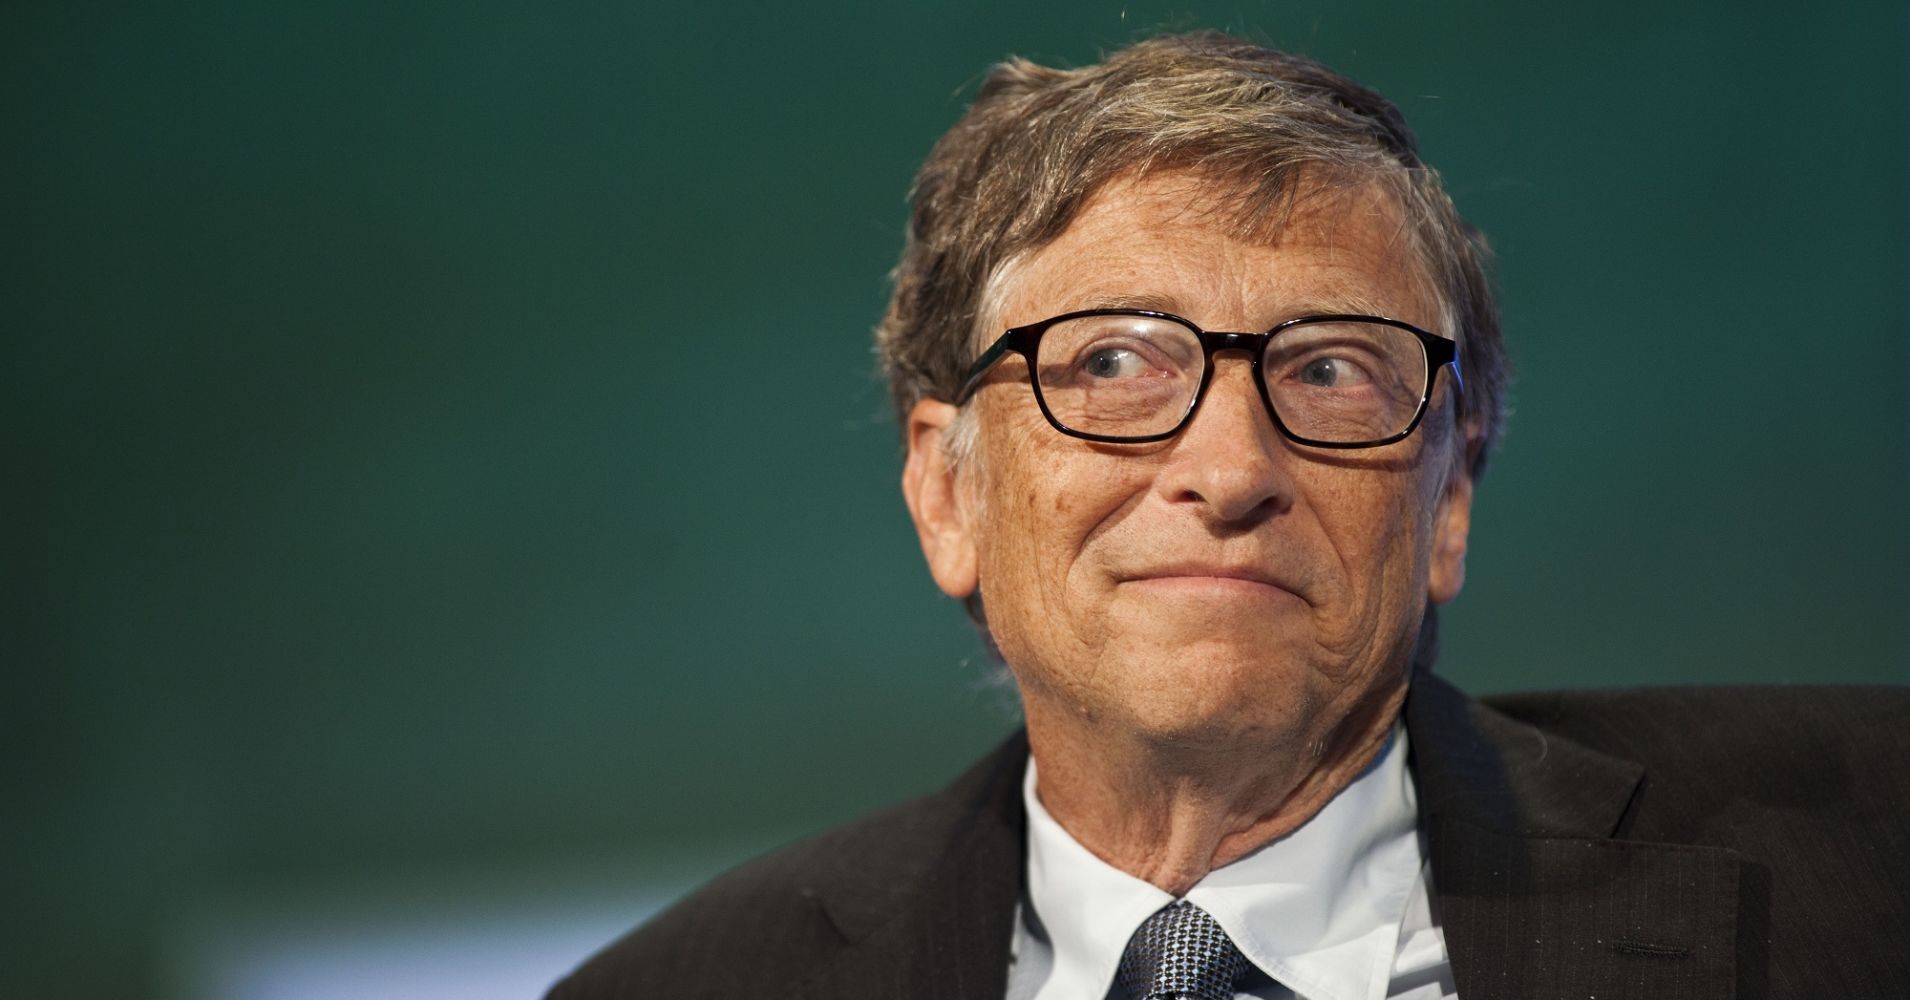 greatest entrepreneurs in the world  - image of Bill Gates